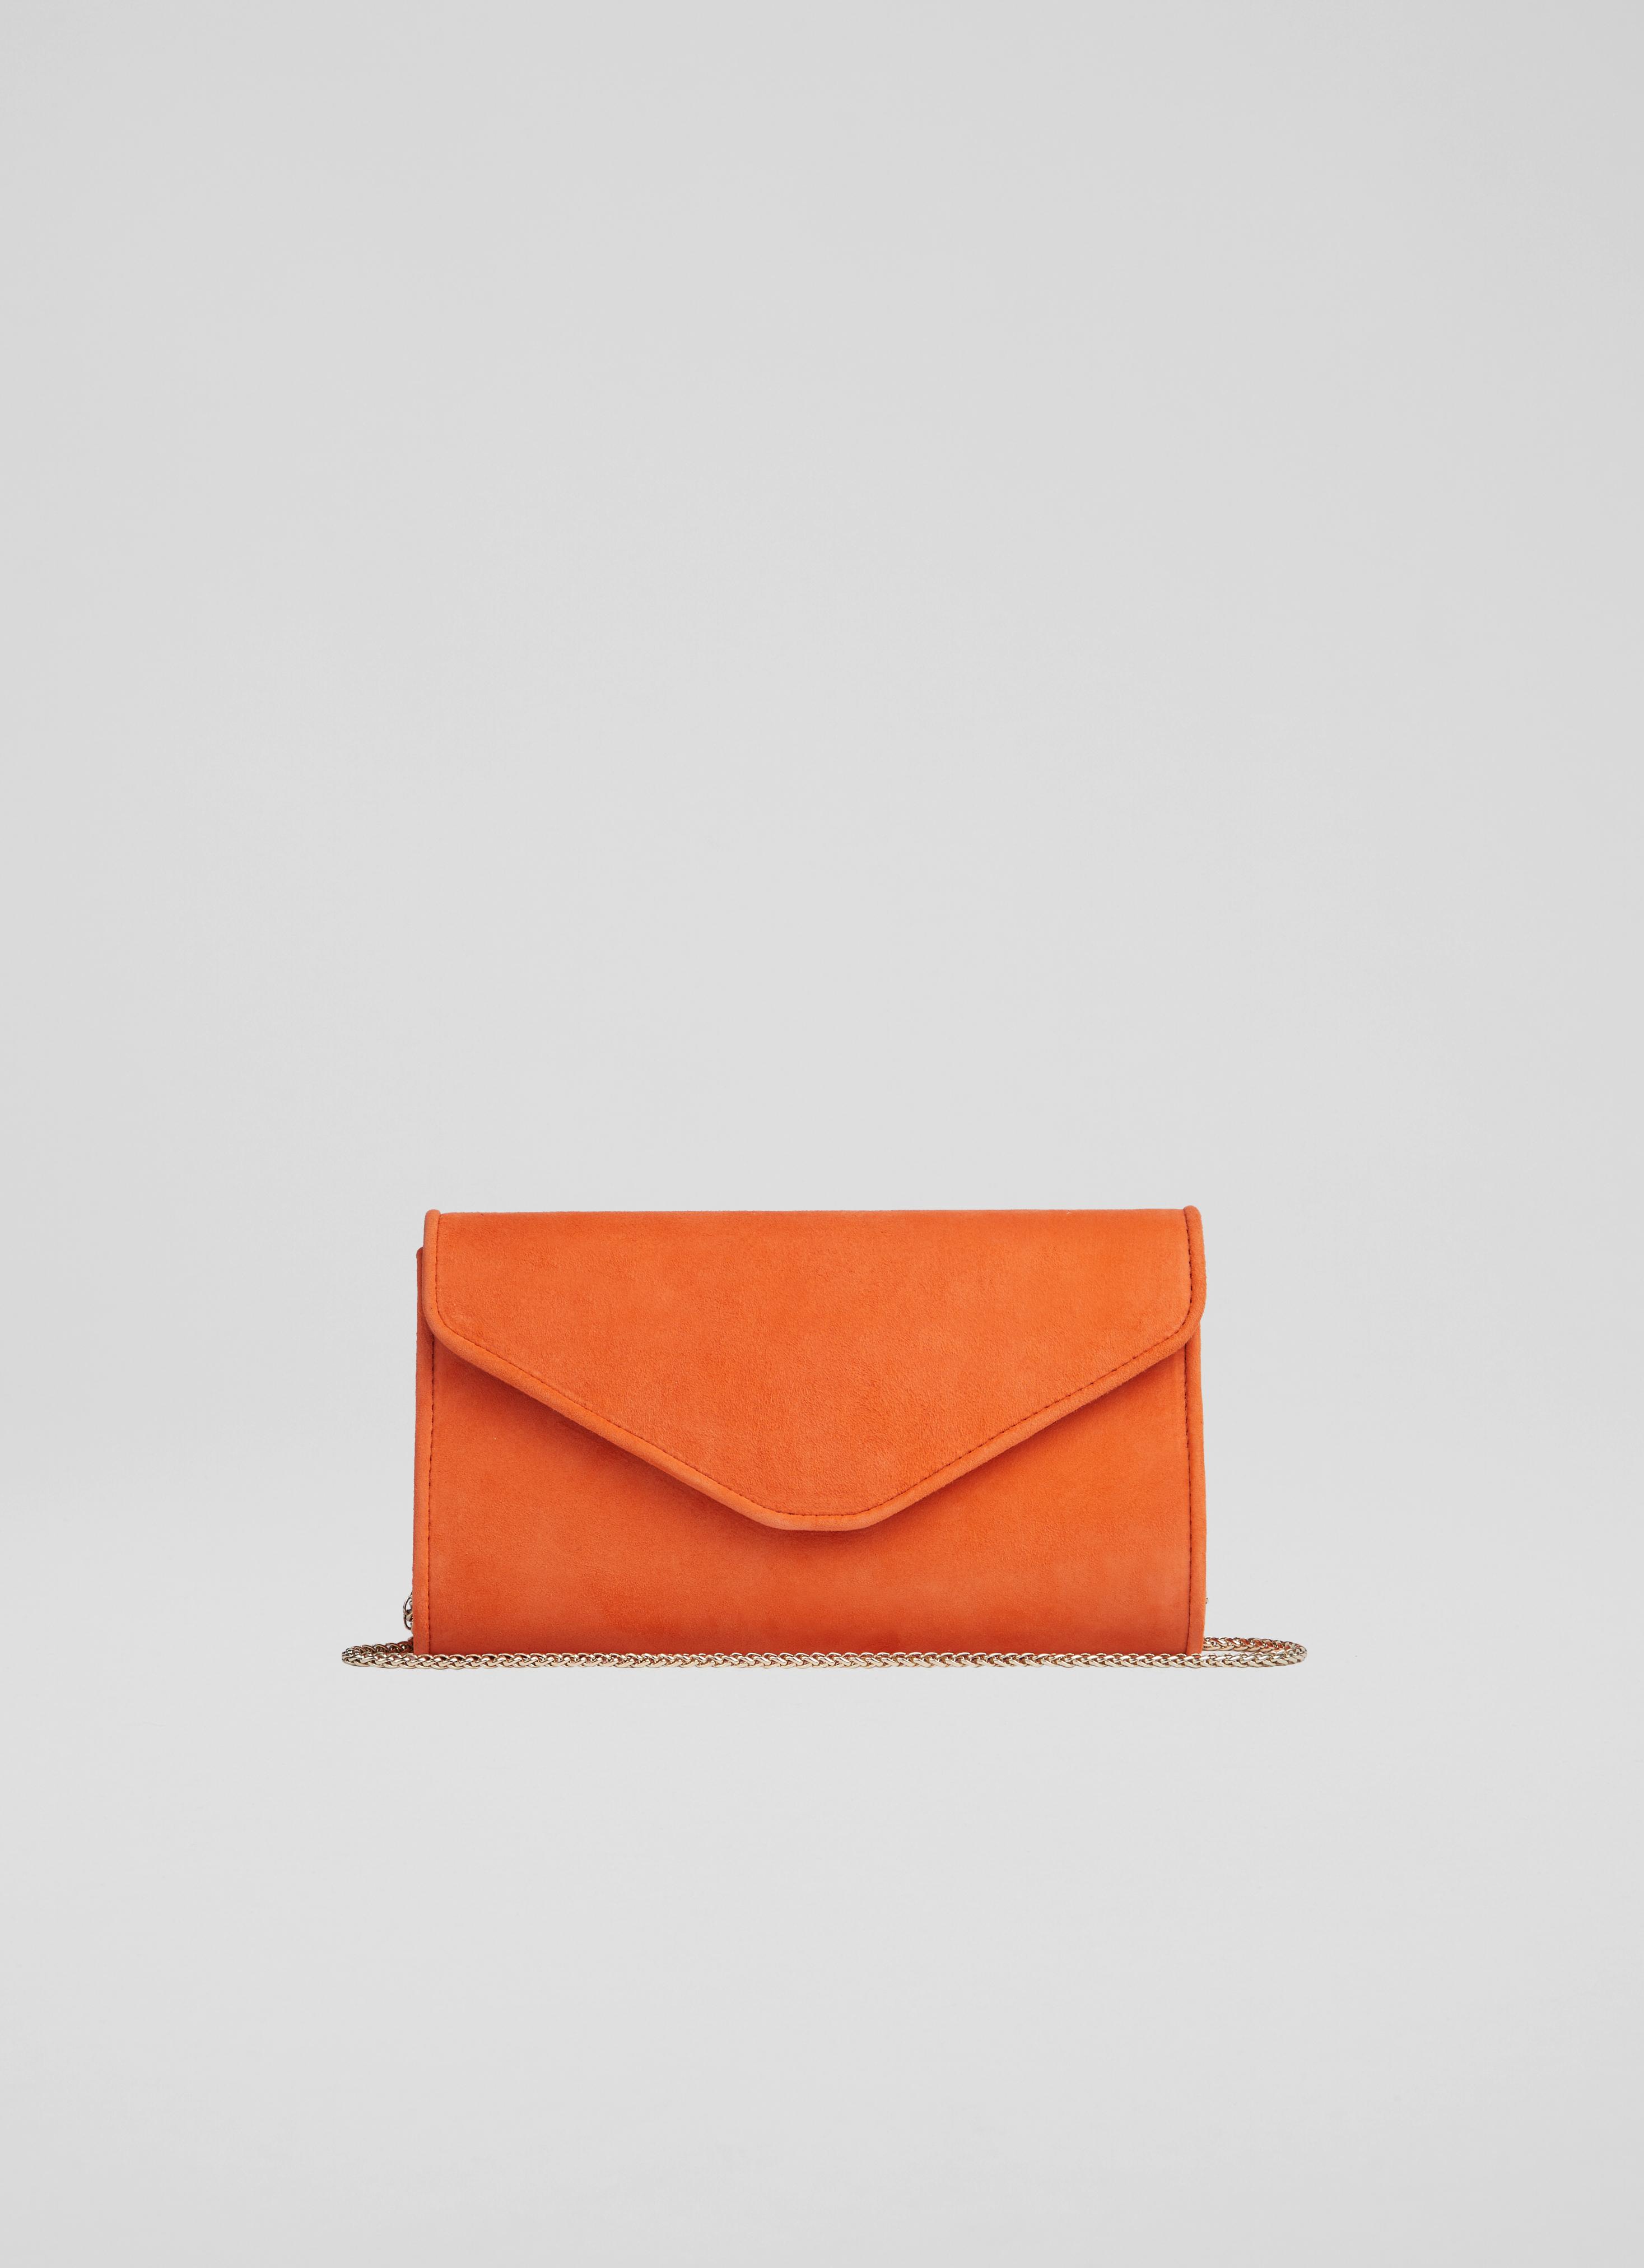 Dominica Orange Suede Clutch Bag, Orange